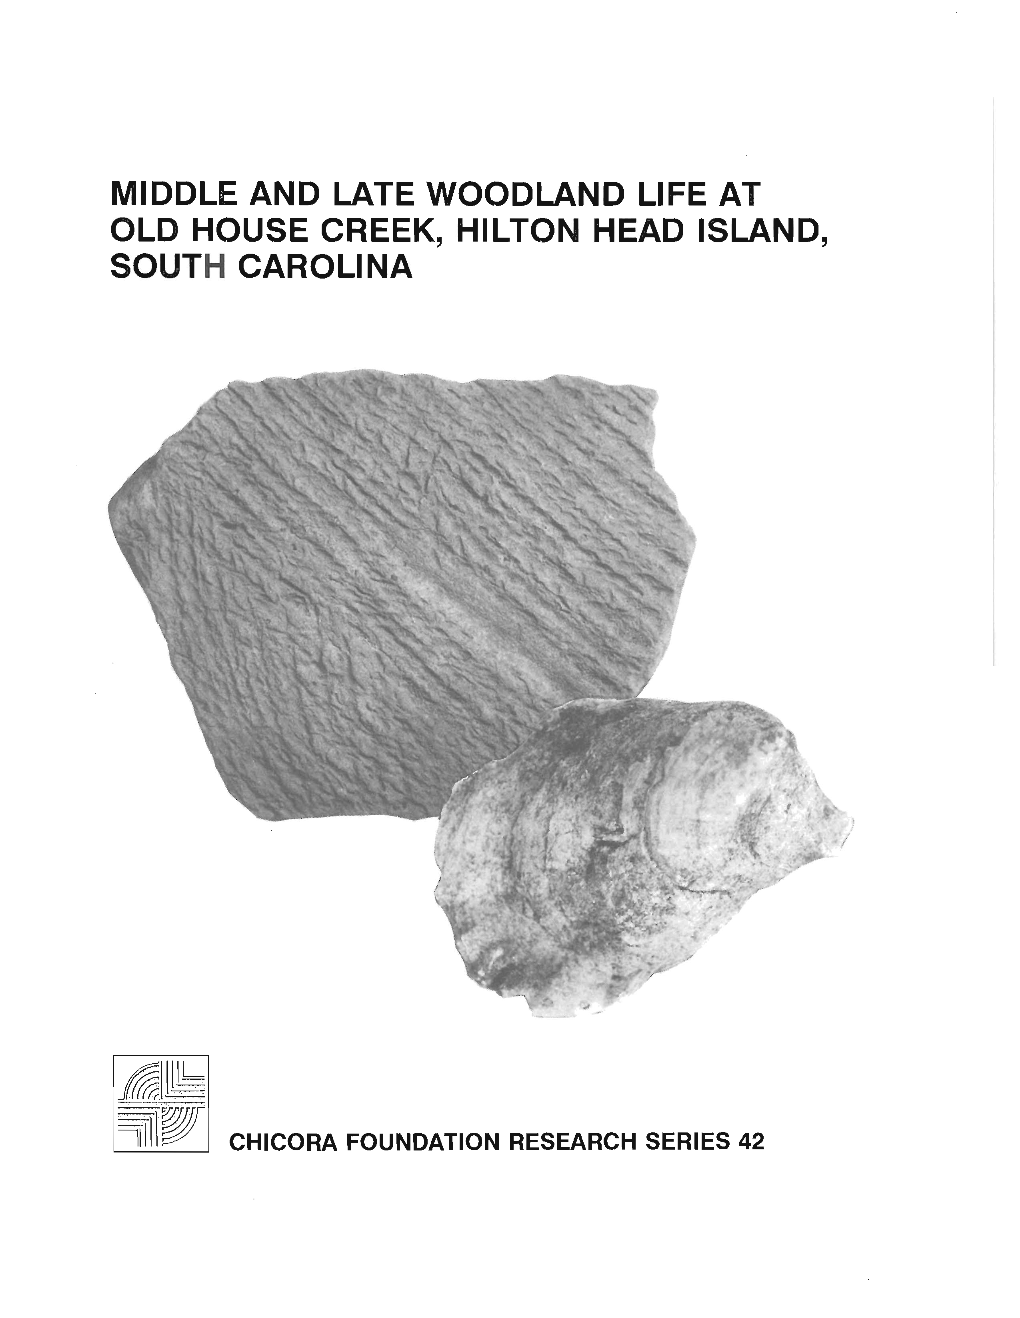 Middle and Late Woodland Life at Old House Creek, Hilton Head Island, South Carolina